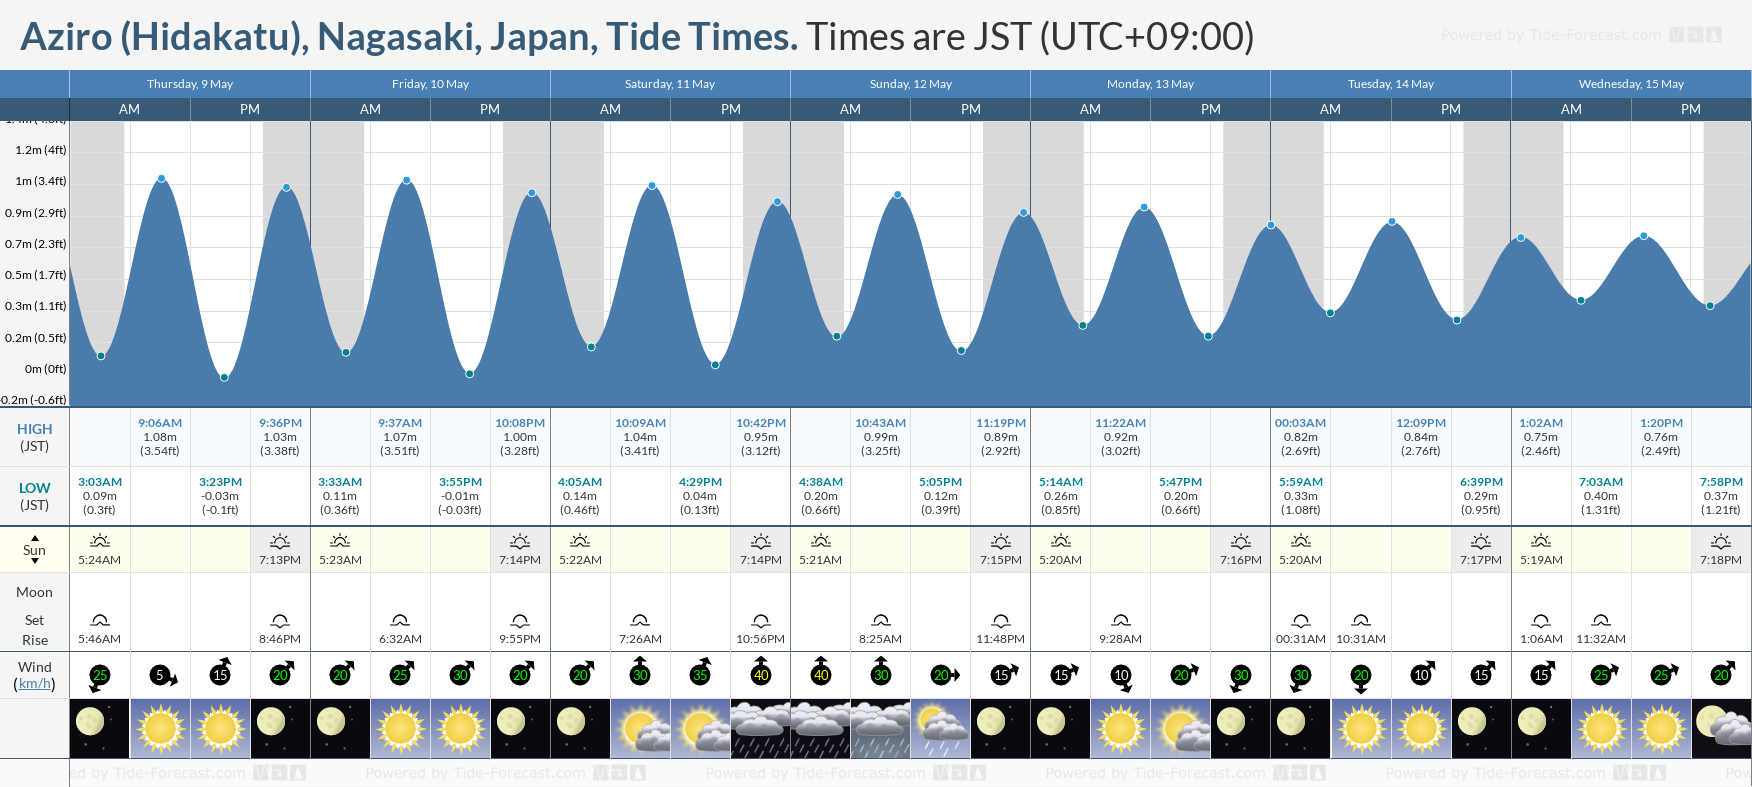 Aziro (Hidakatu), Nagasaki, Japan Tide Chart including high and low tide tide times for the next 7 days